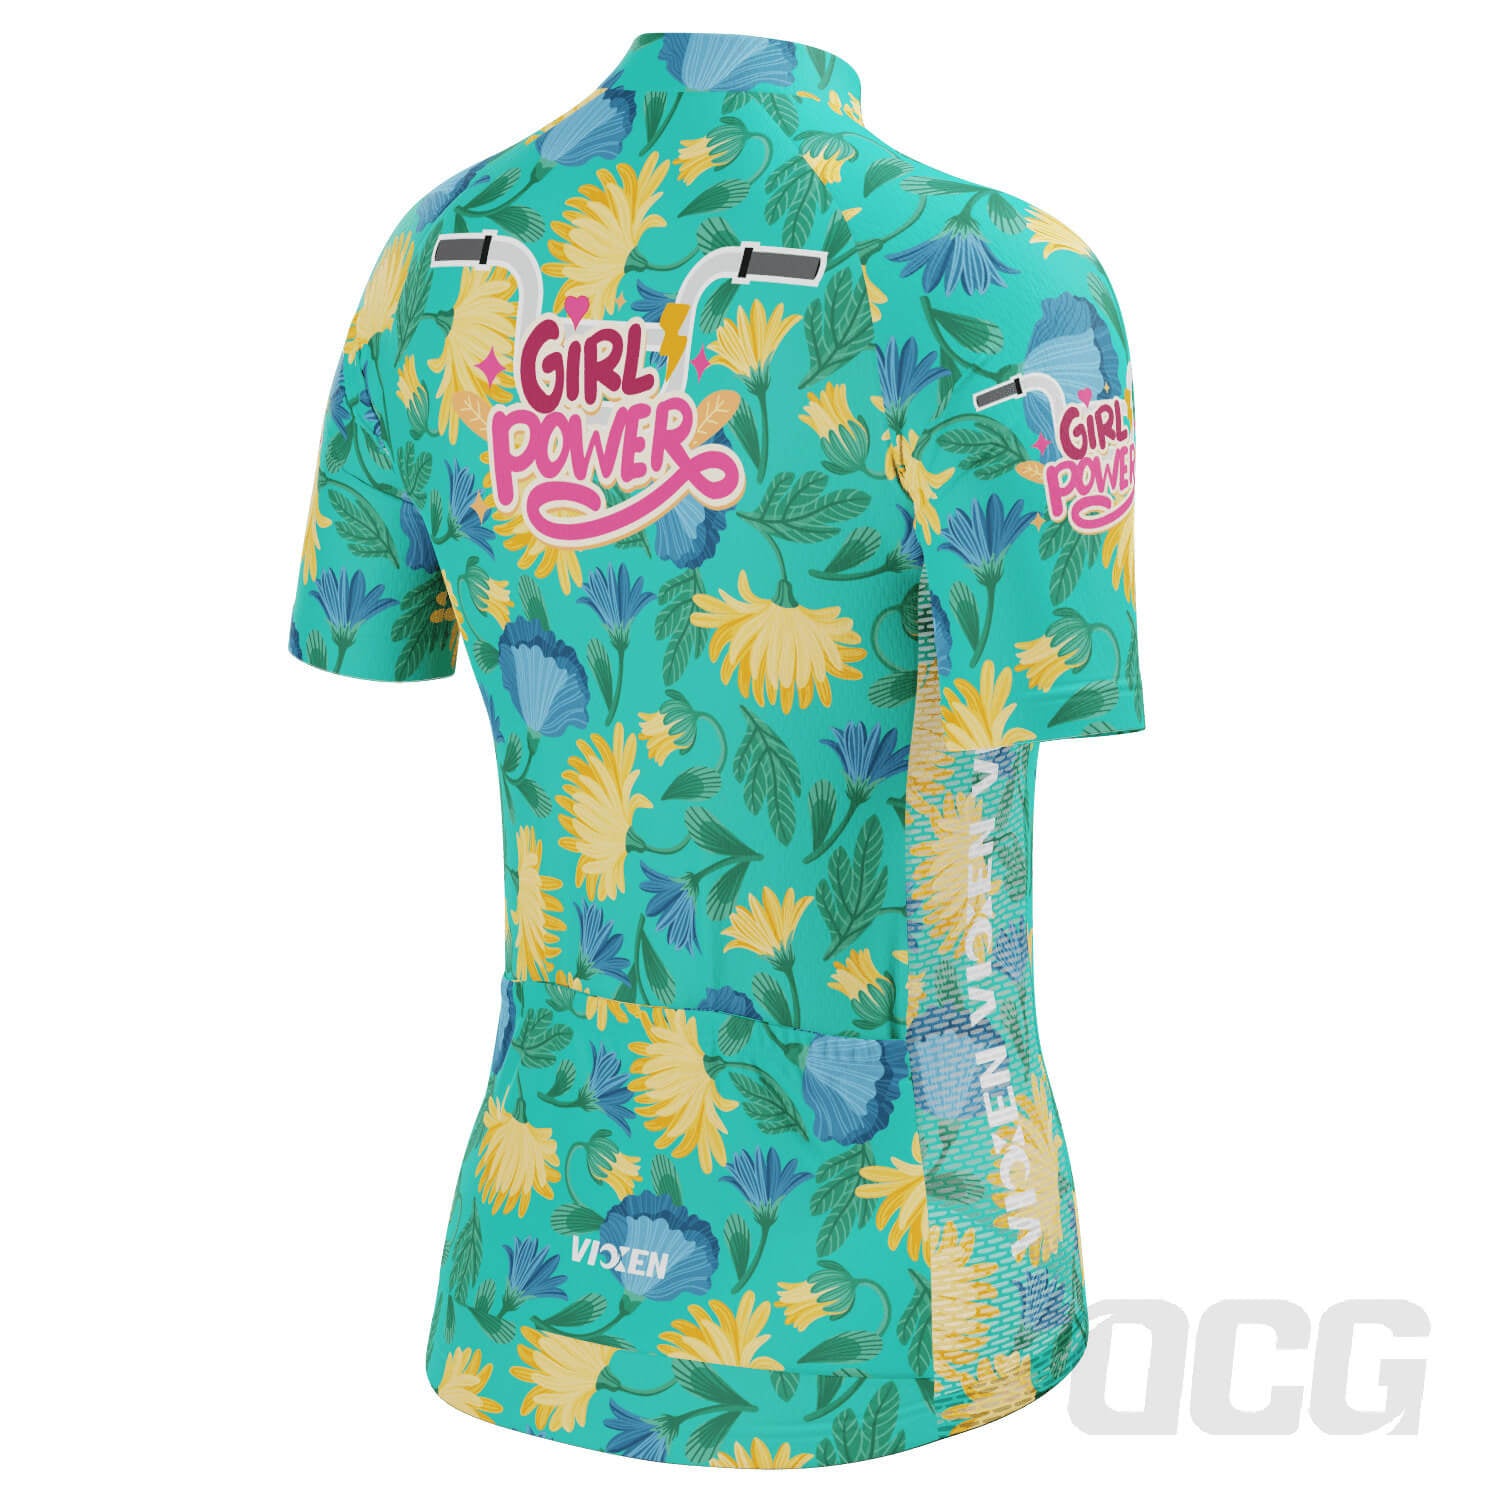 Women's Girl Power Series 1 Short Sleeve Cycling Jersey